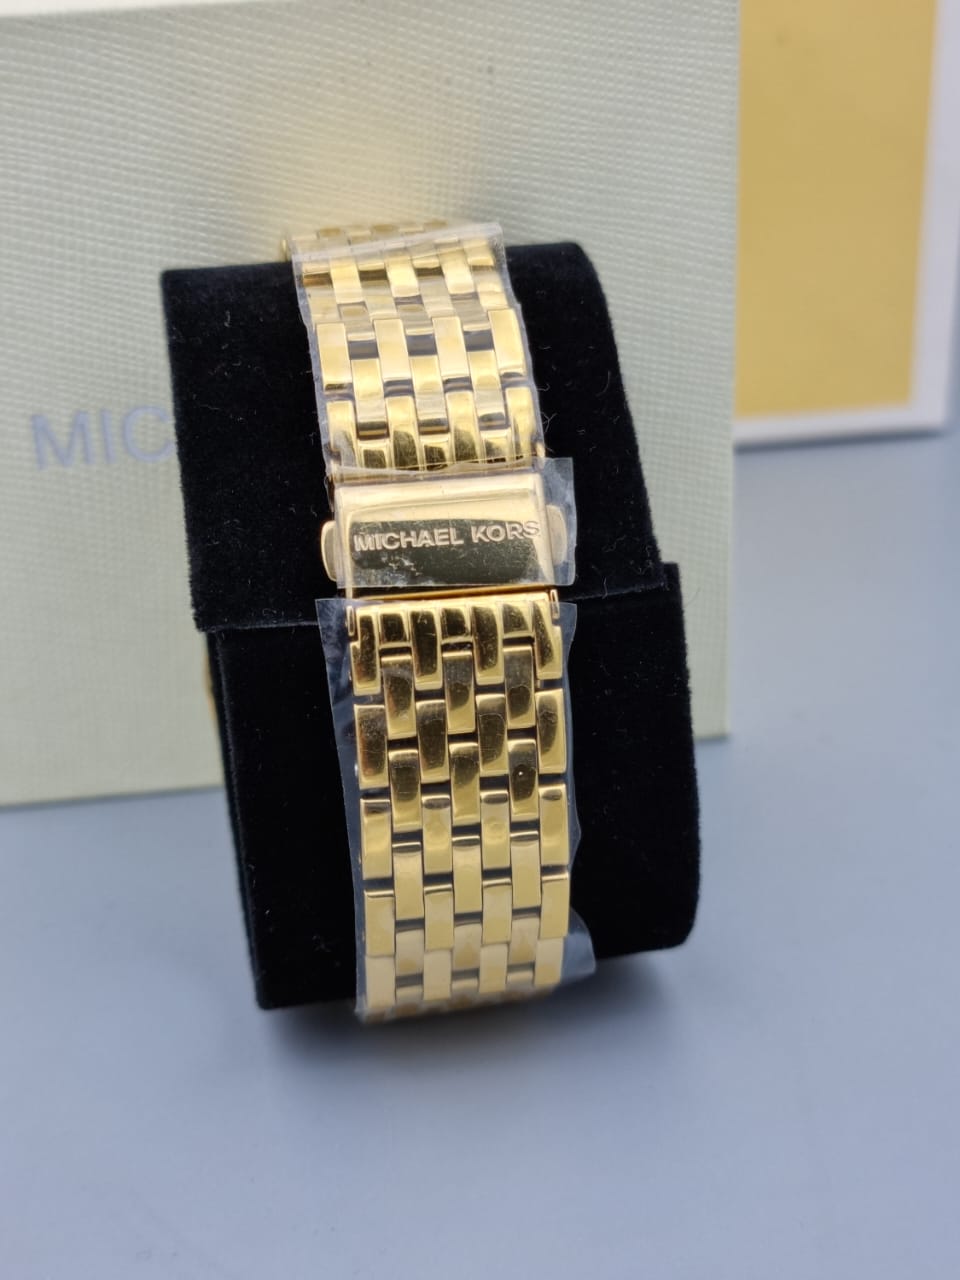 Michael Kors Darci Watch Gold MK3191 Women's Watch